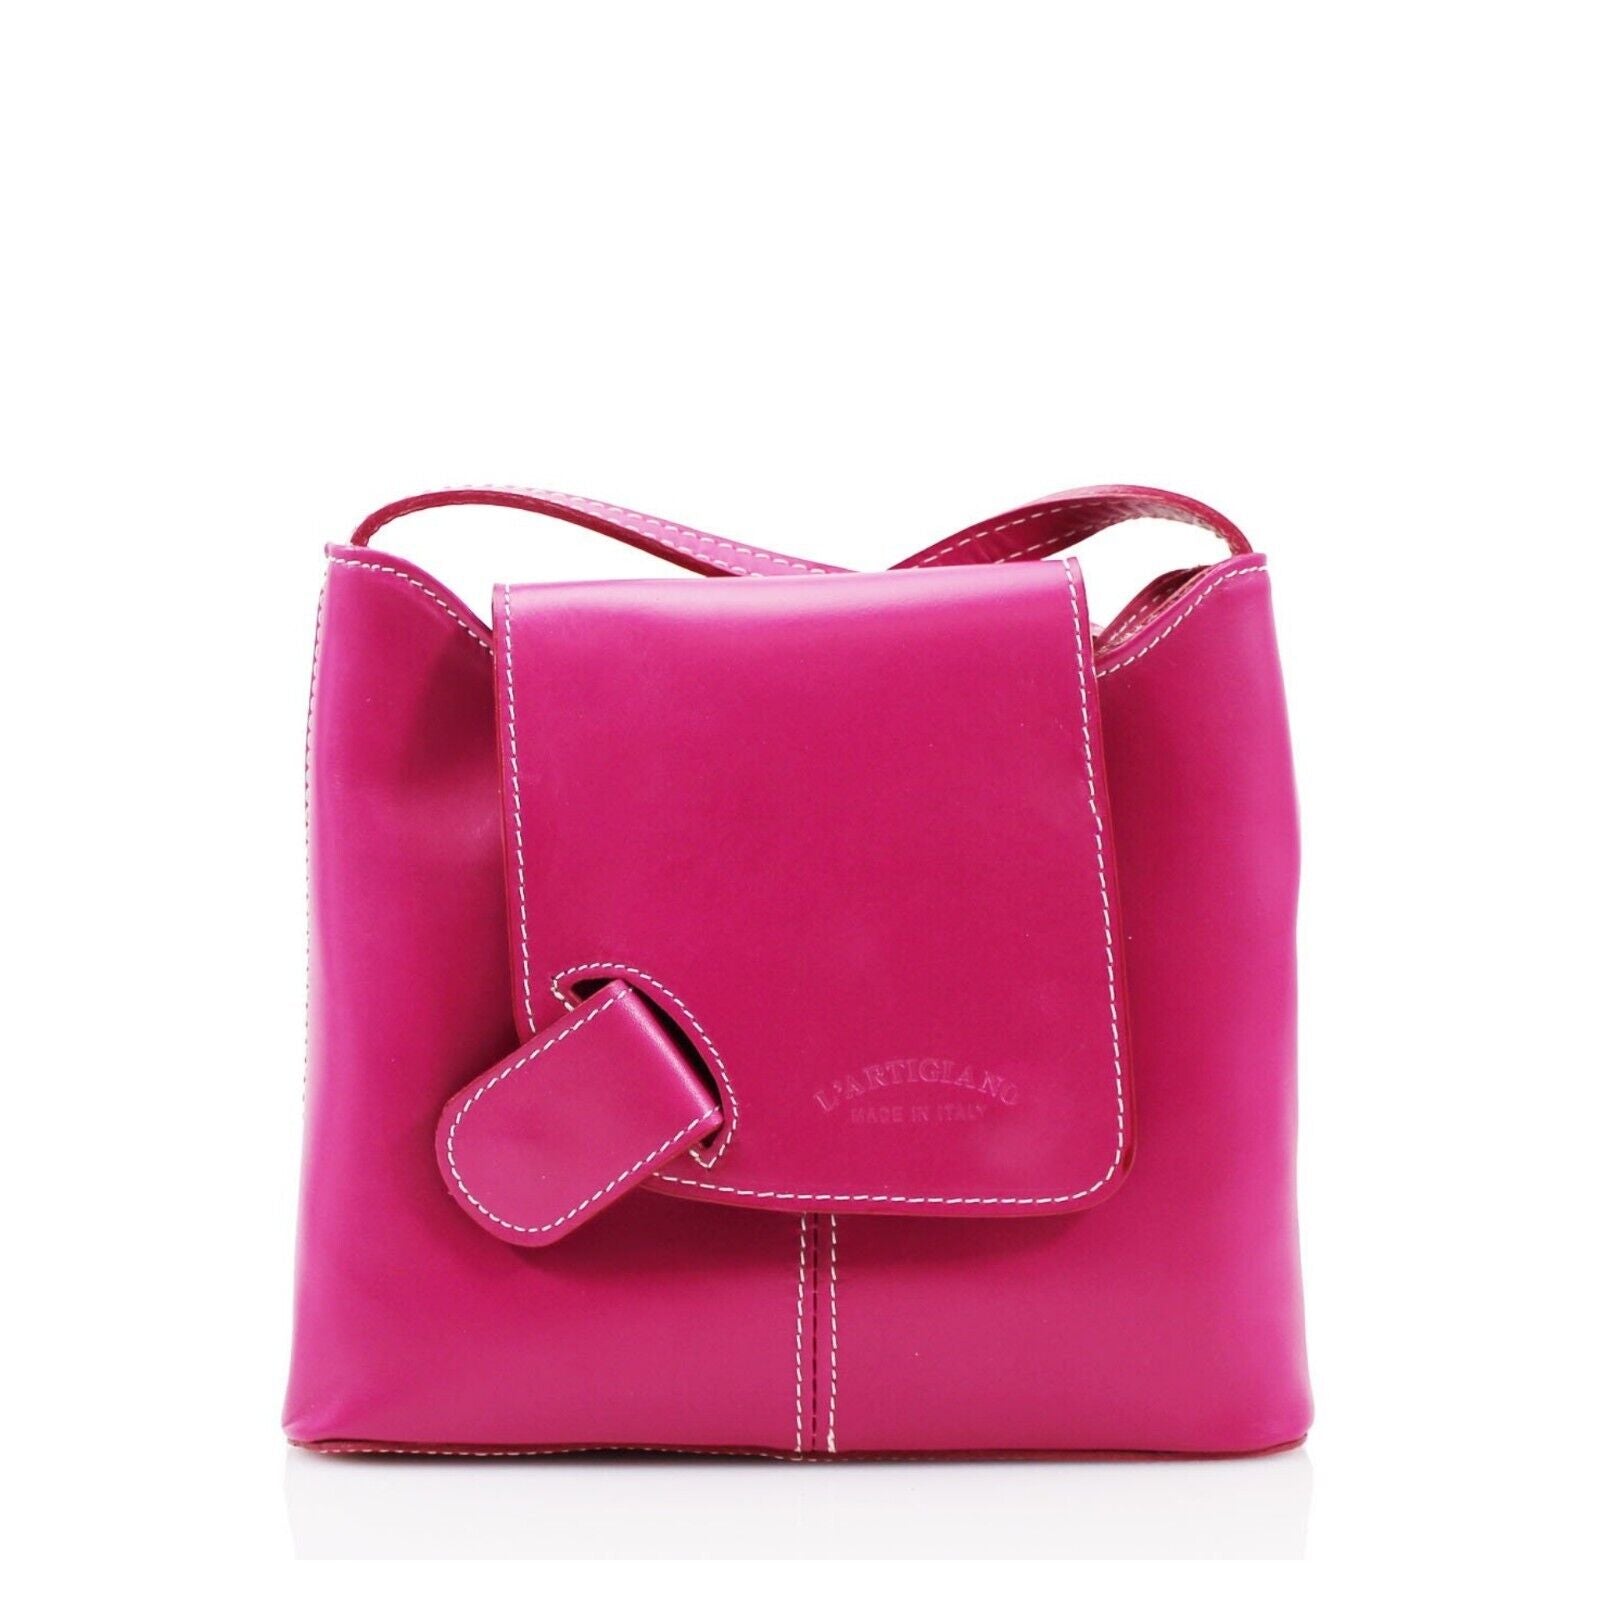 VERA PELLE Cascino Patent Italian Leather Crossbody Bag - A2Z UK Fashion